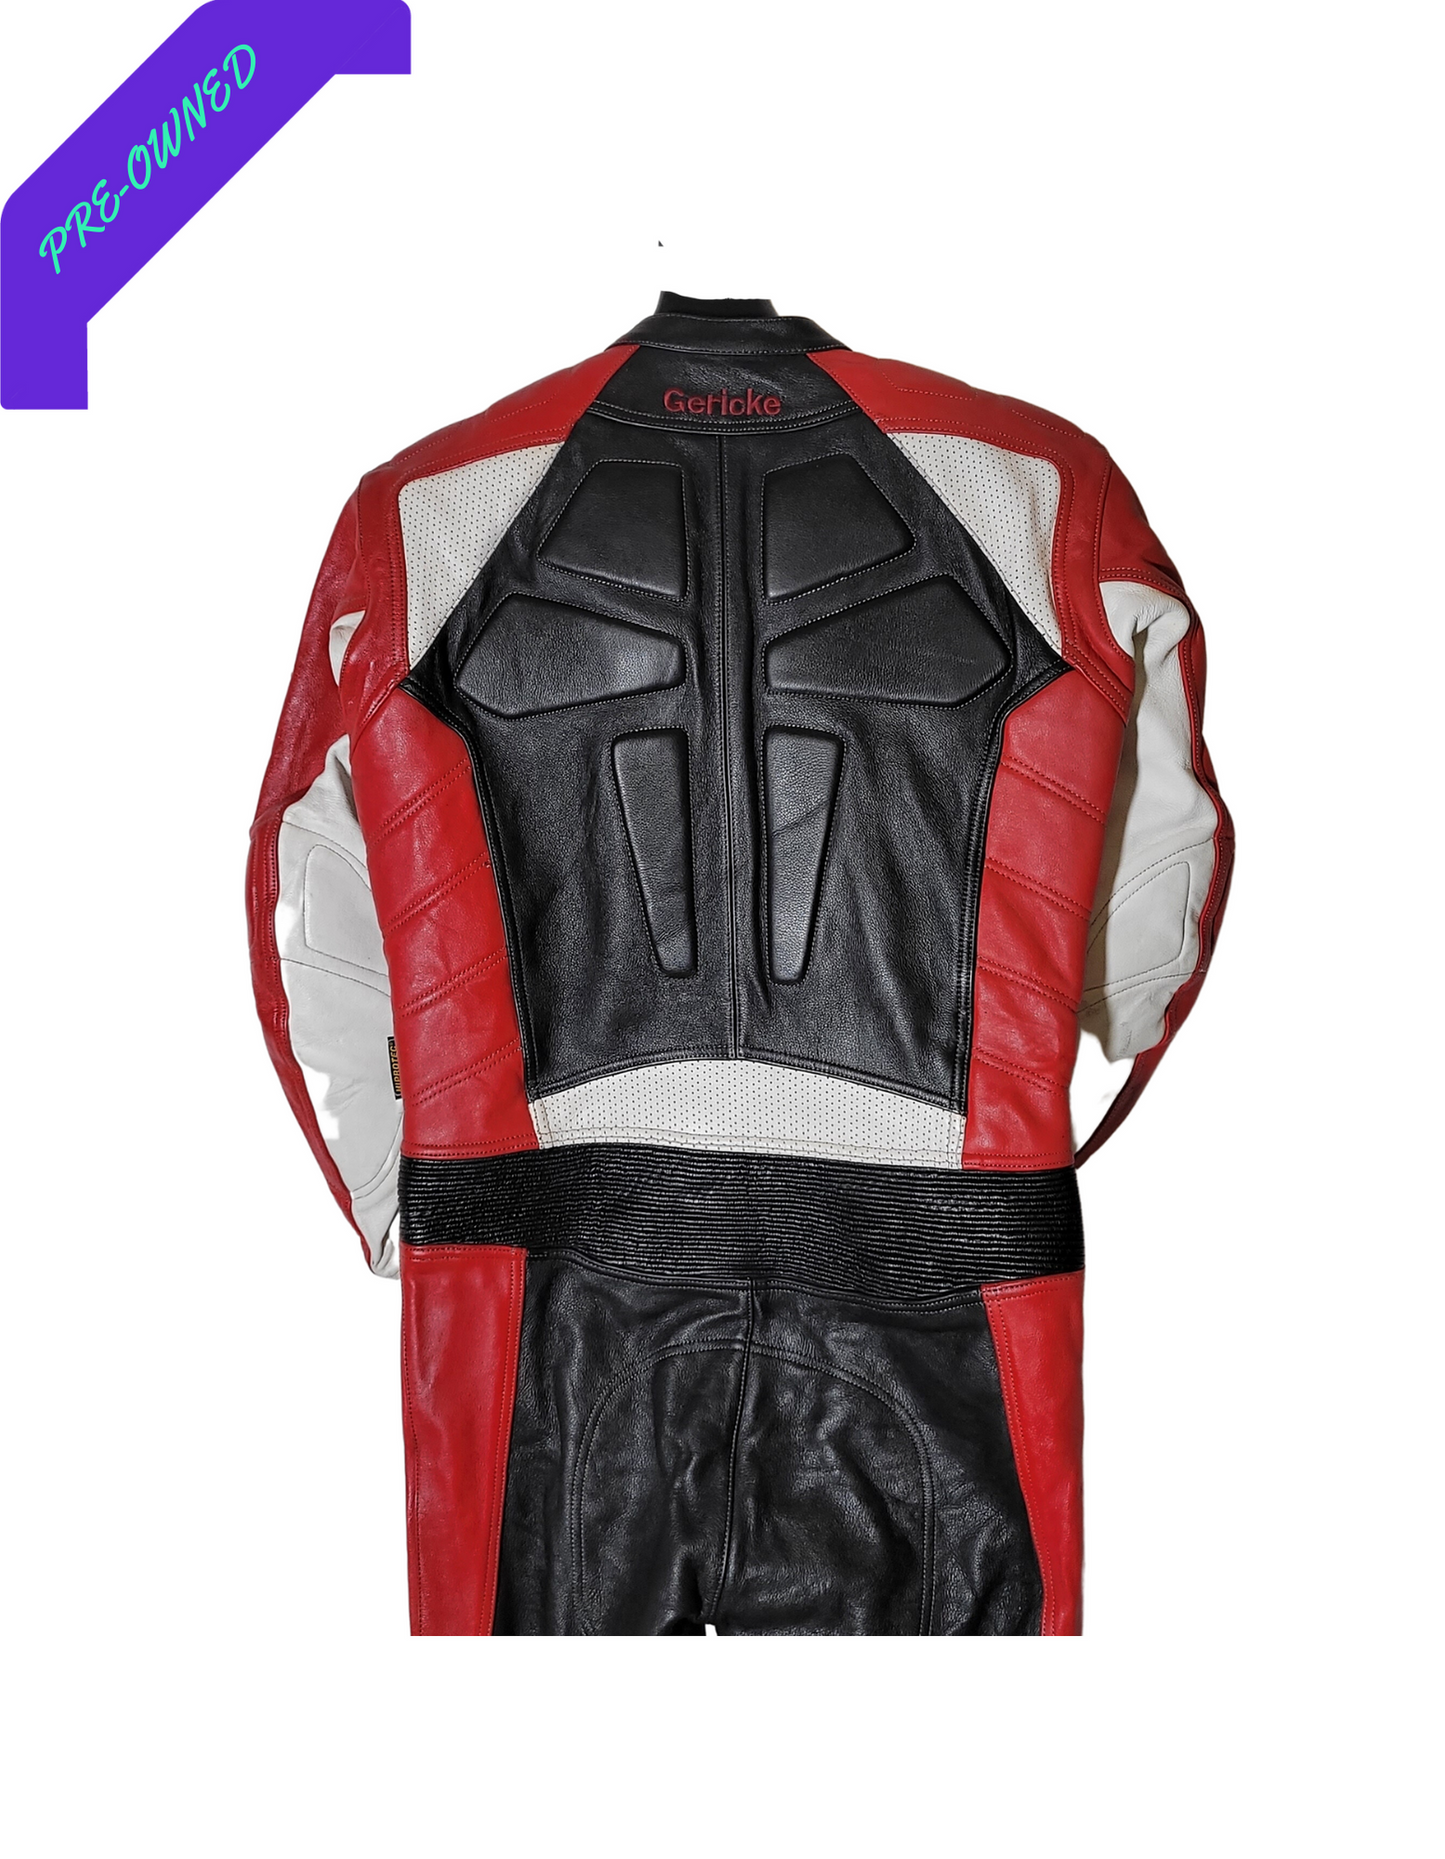 Pro Sports I Hein Gericke I Men Racing Suit I 1-piece I Red/Black